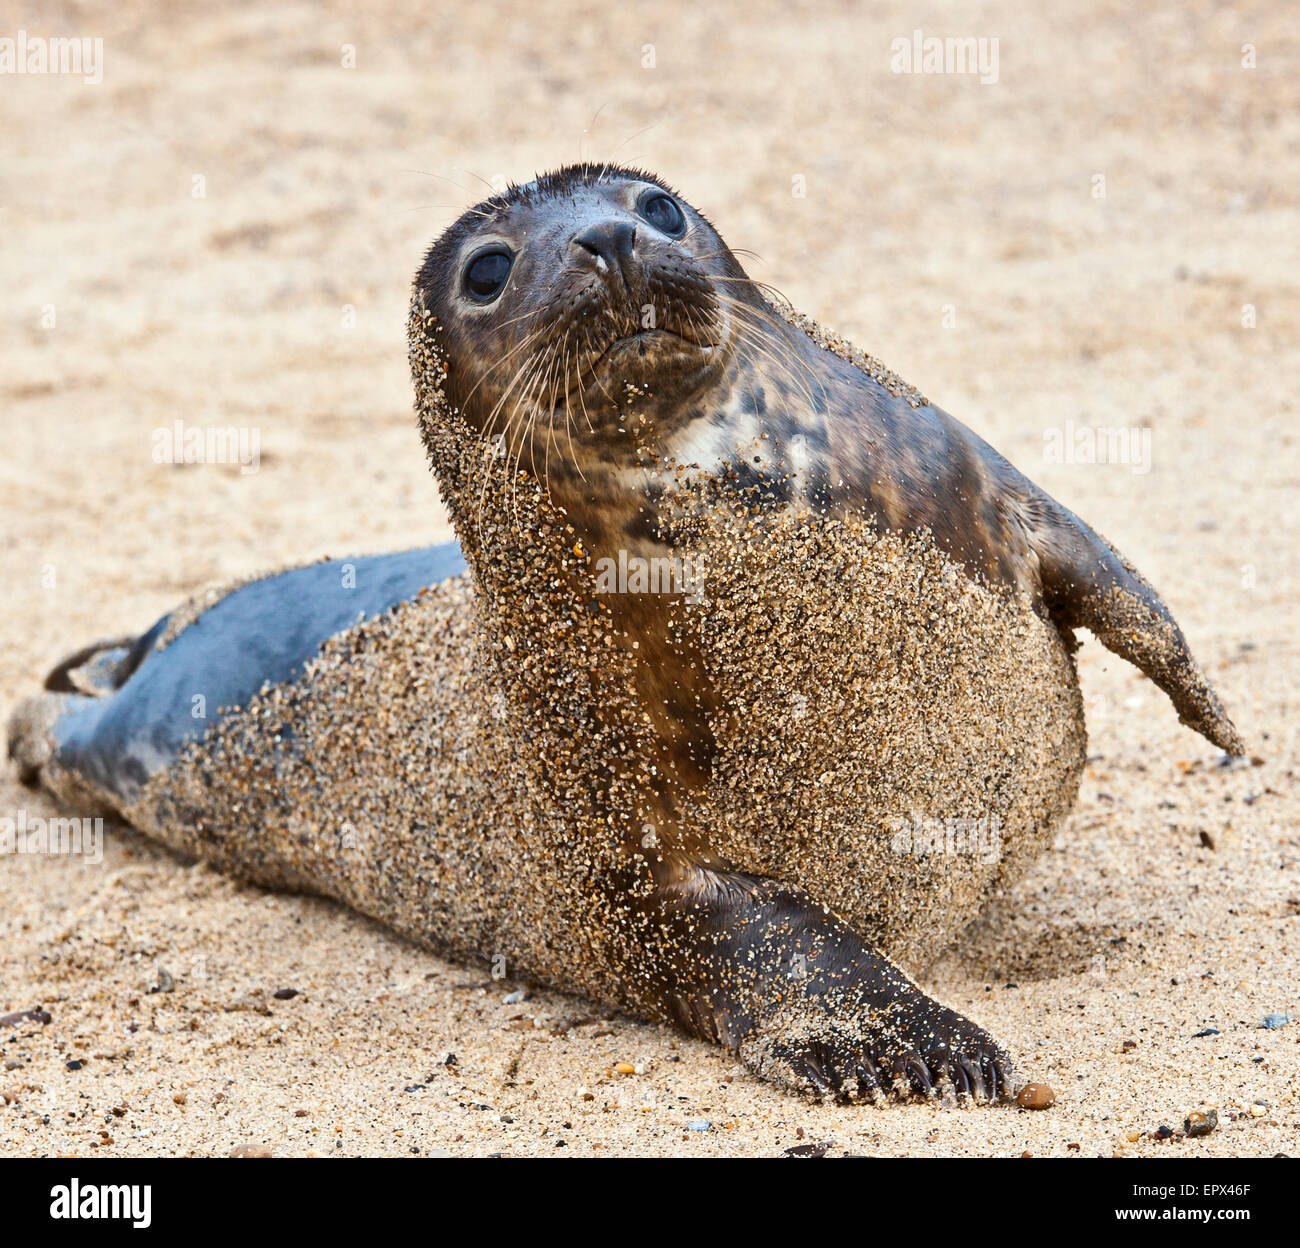 Grey seal Pup. Stockfoto